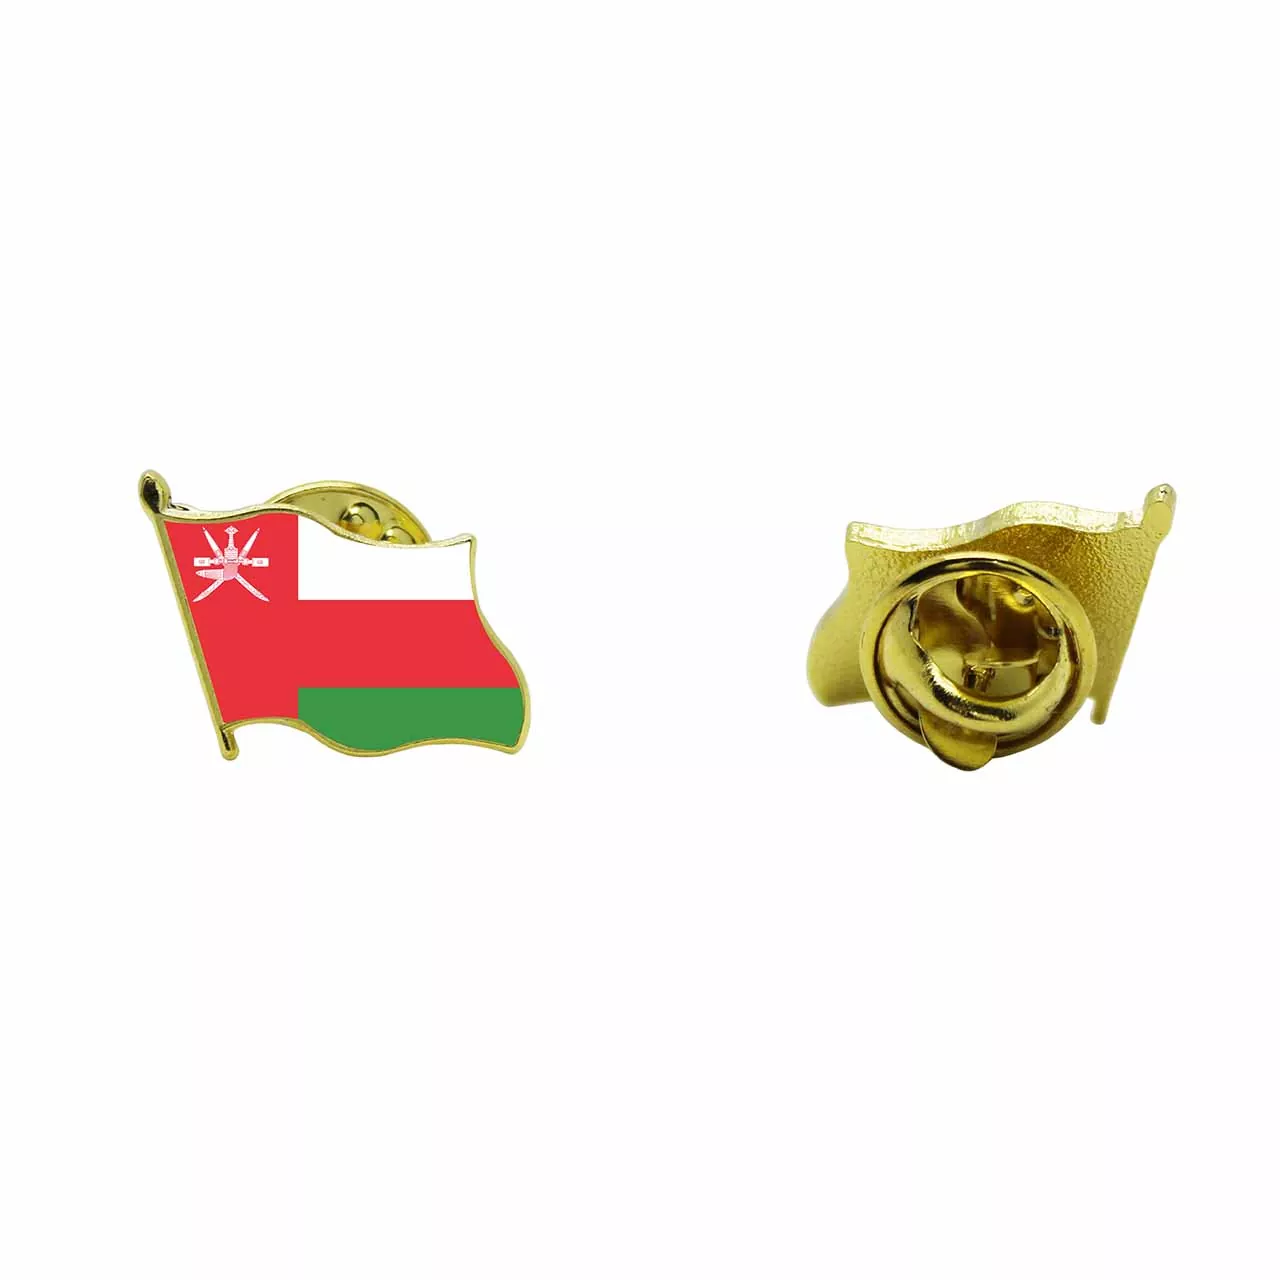 Oman National Flag Lapel Pins